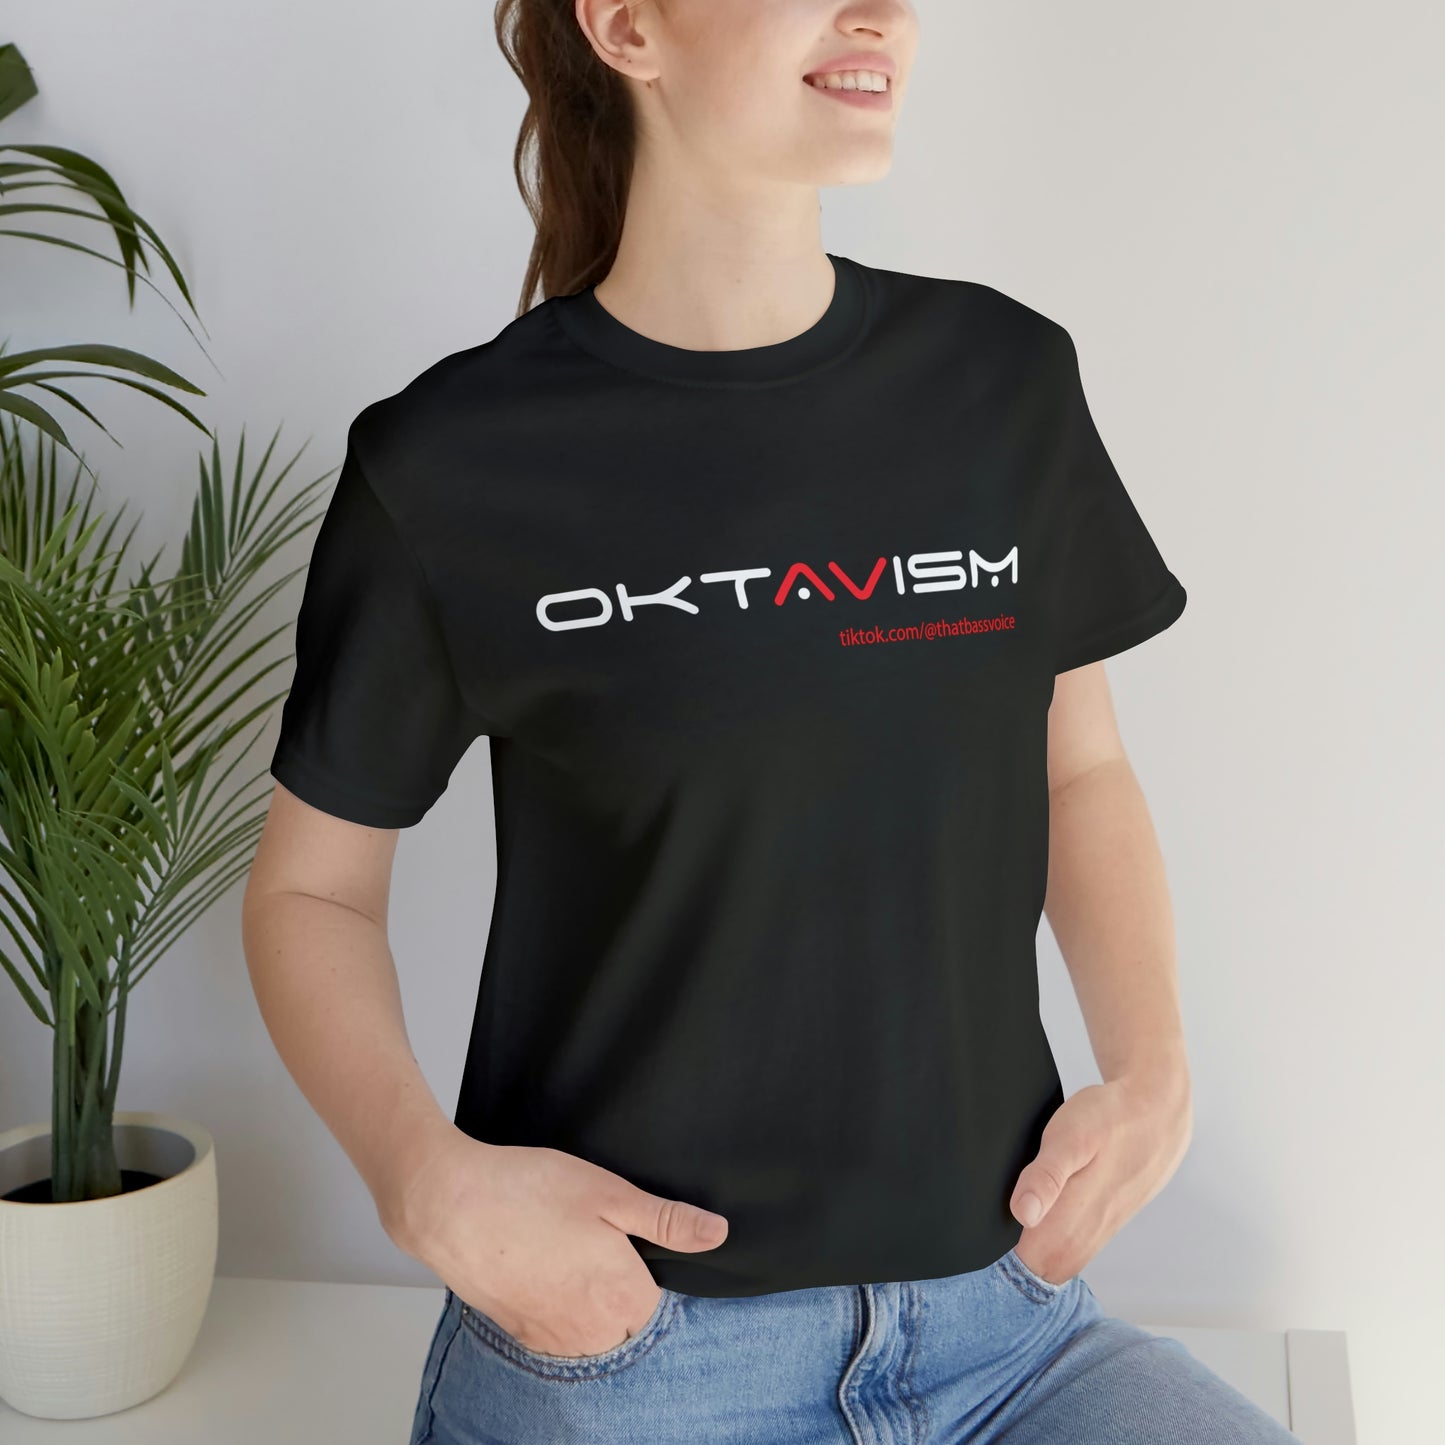 "Oktavism" Unisex Jersey Short Sleeve Tee